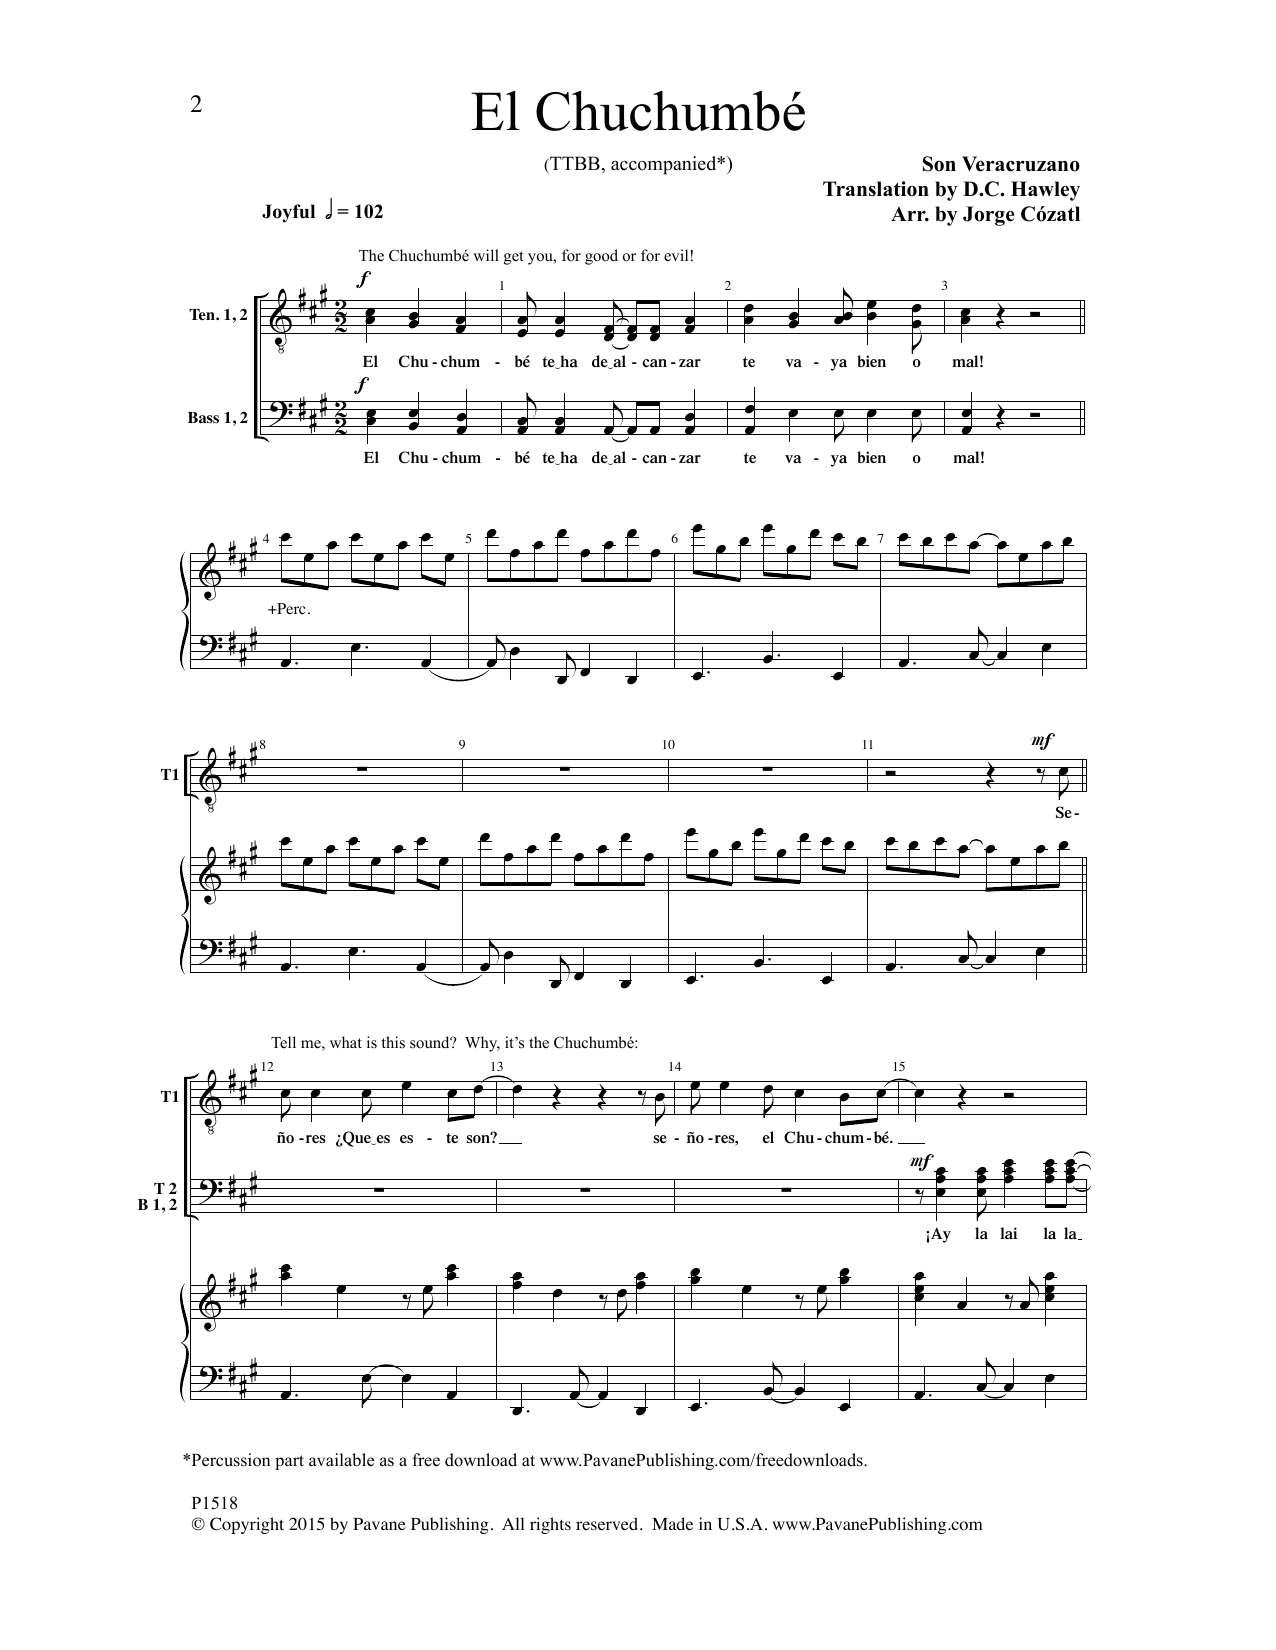 Download Jorge Cozatl El Chuchumbe Sheet Music and learn how to play TTBB Choir PDF digital score in minutes